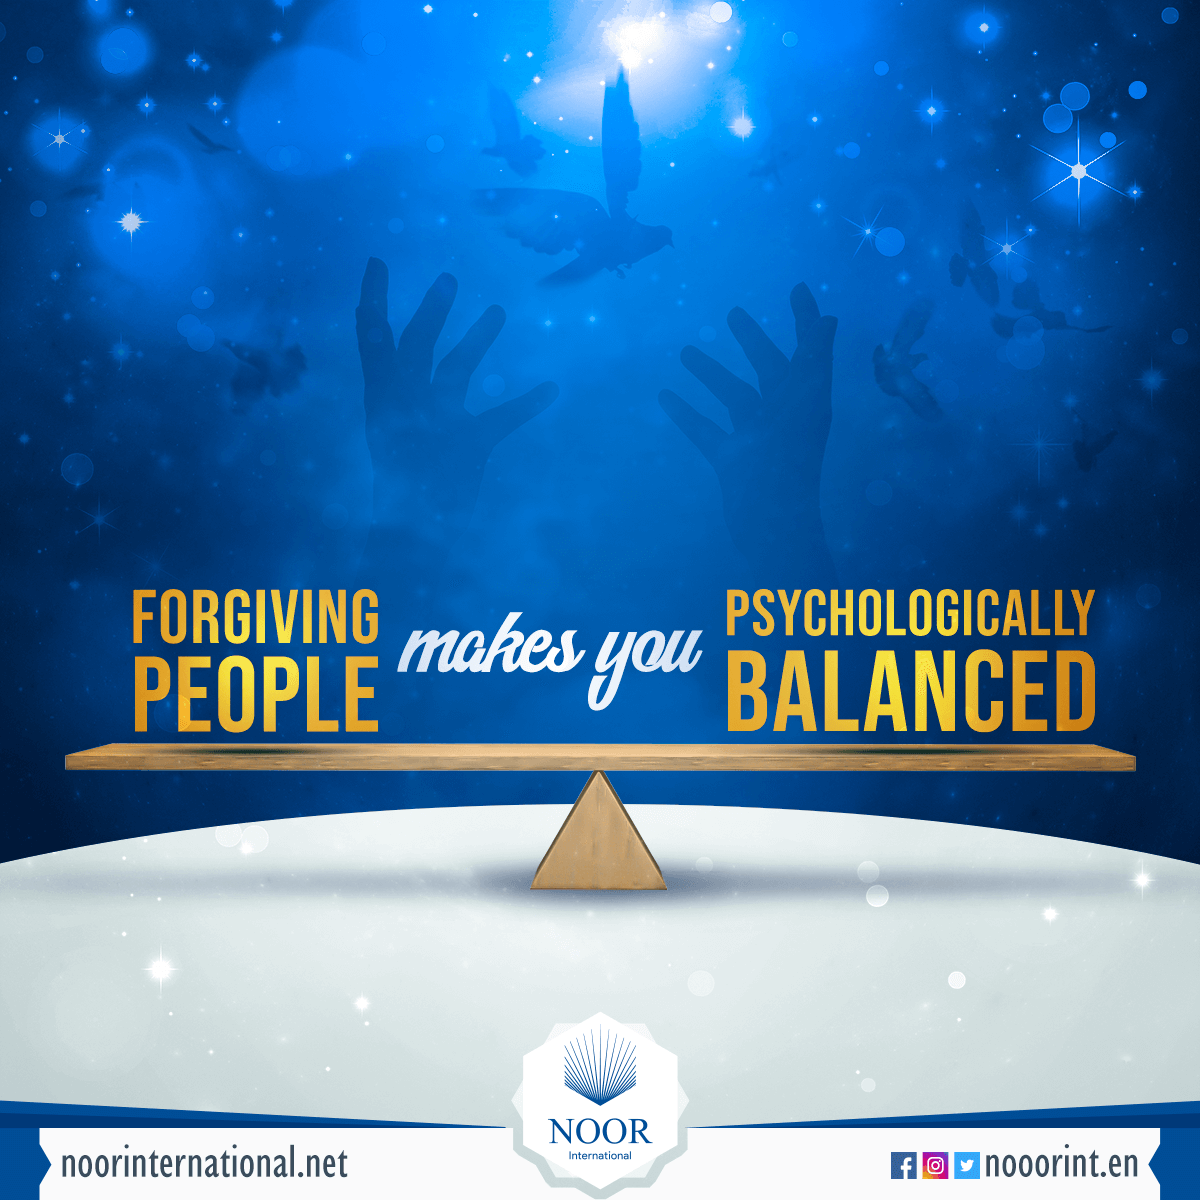 Forgiving people makes you psychologically balanced